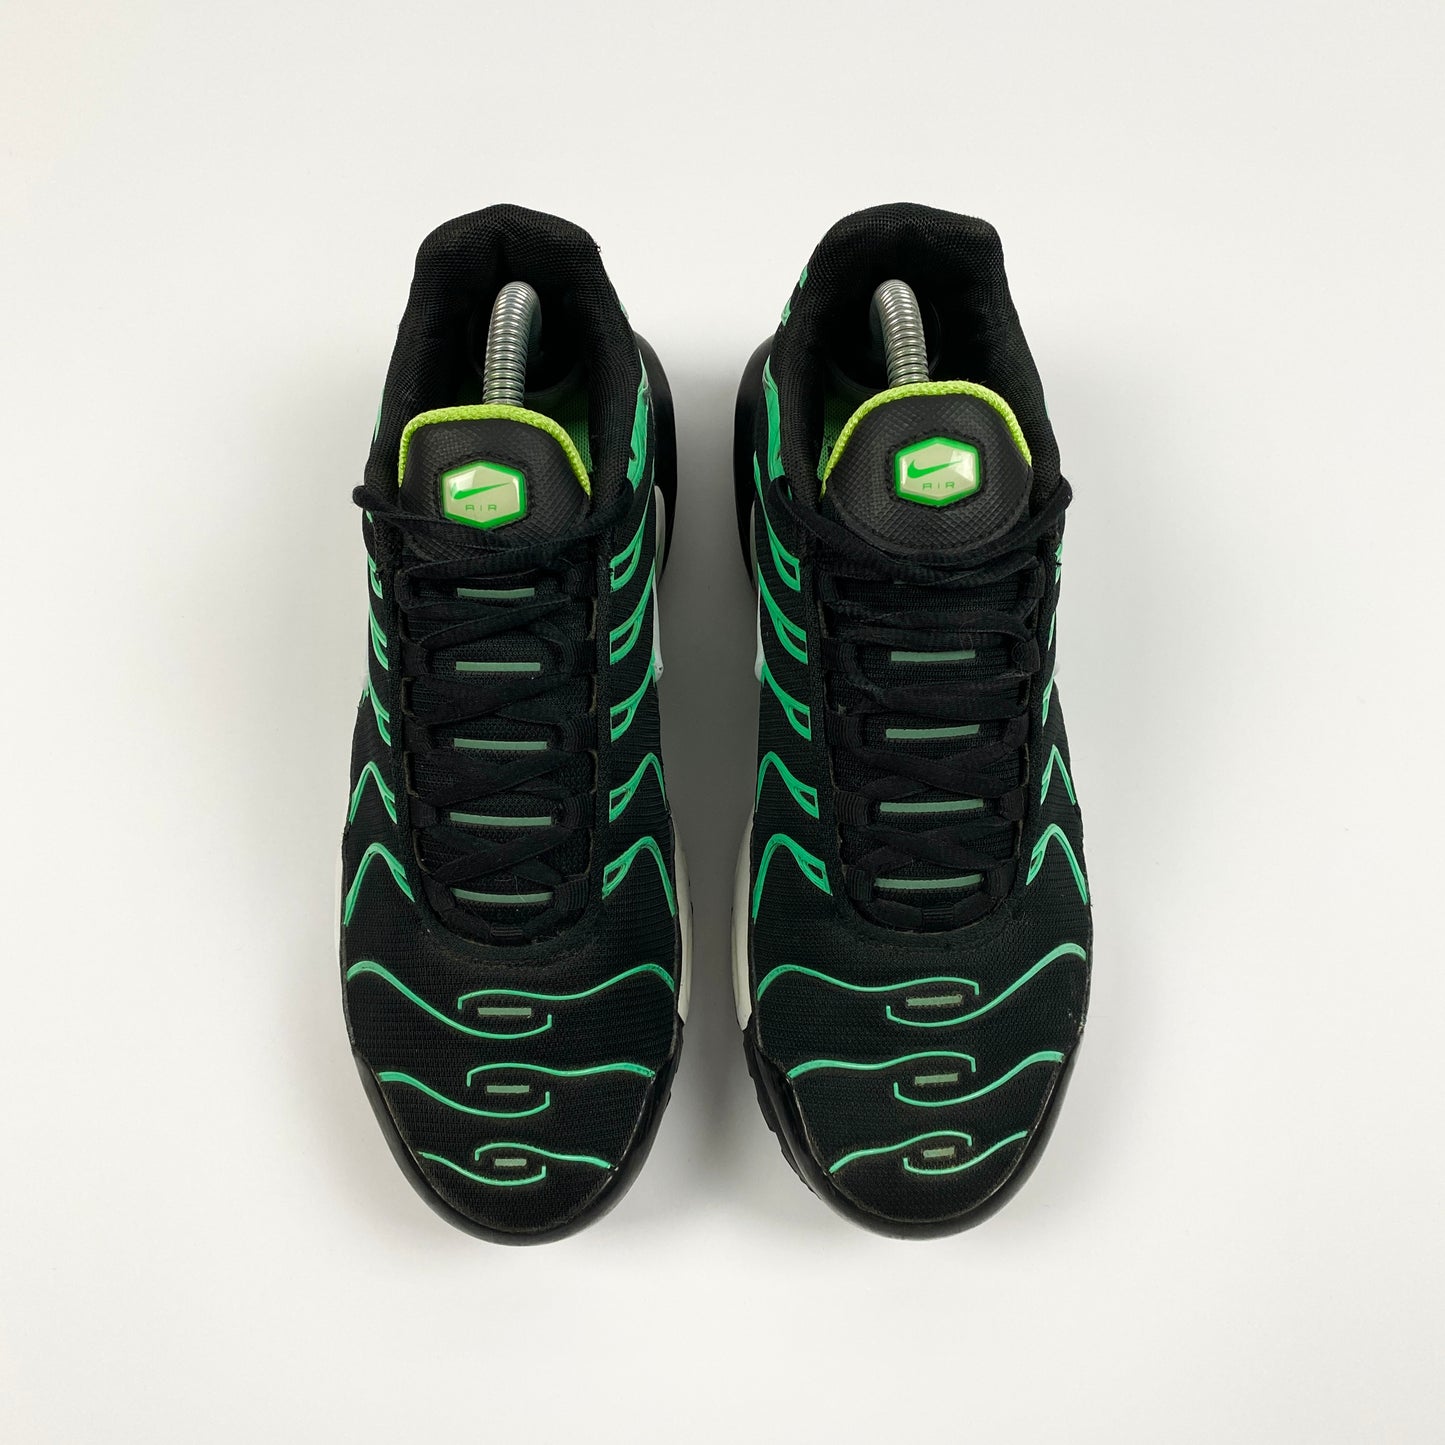 Nike Air Max Plus Tn 'Electric Green' (2017)